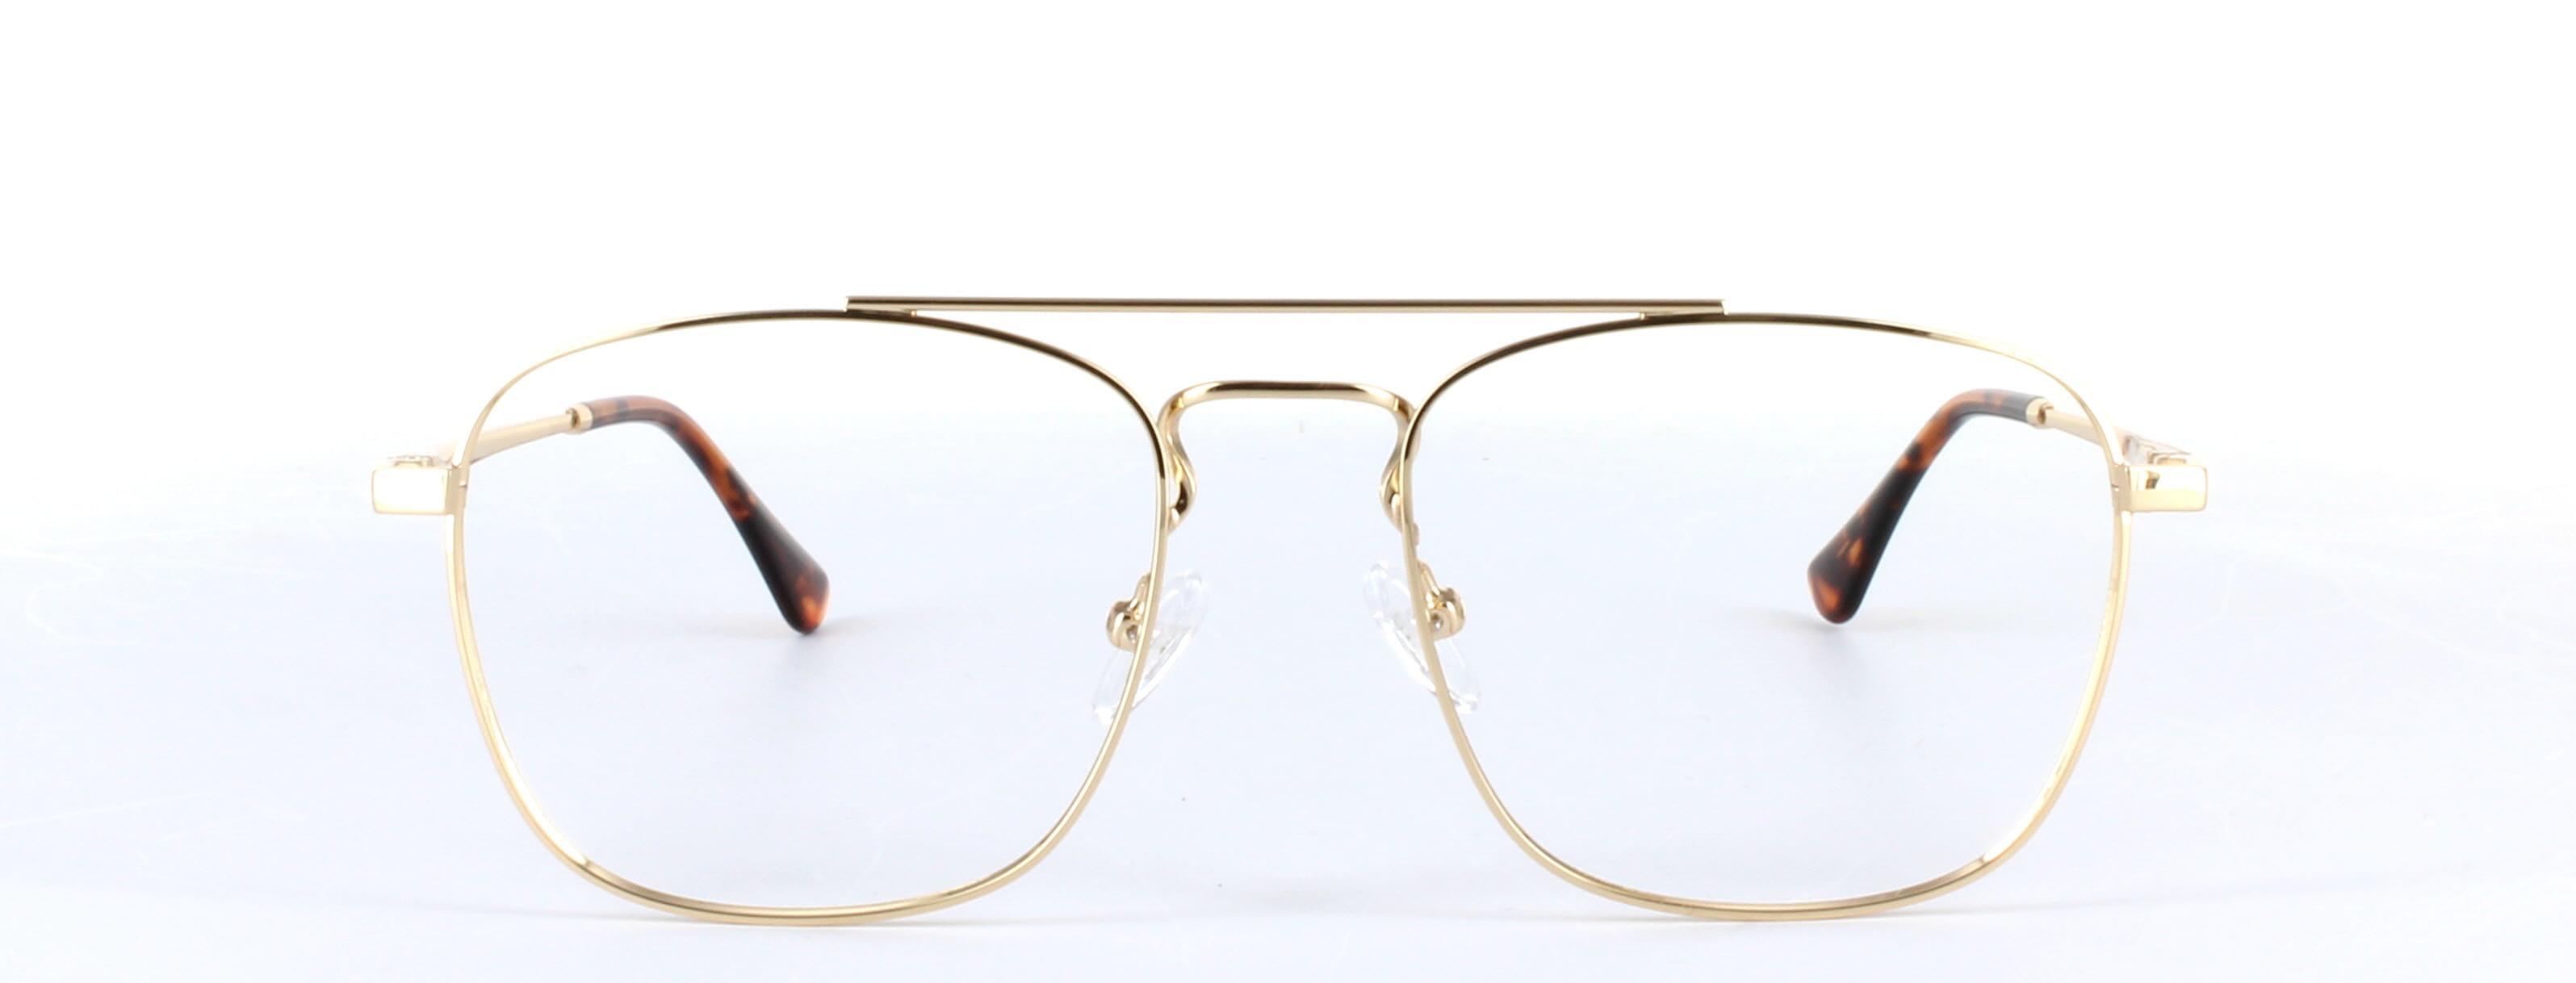 Enrique Gold Full Rim Aviator Metal Glasses - Image View 5